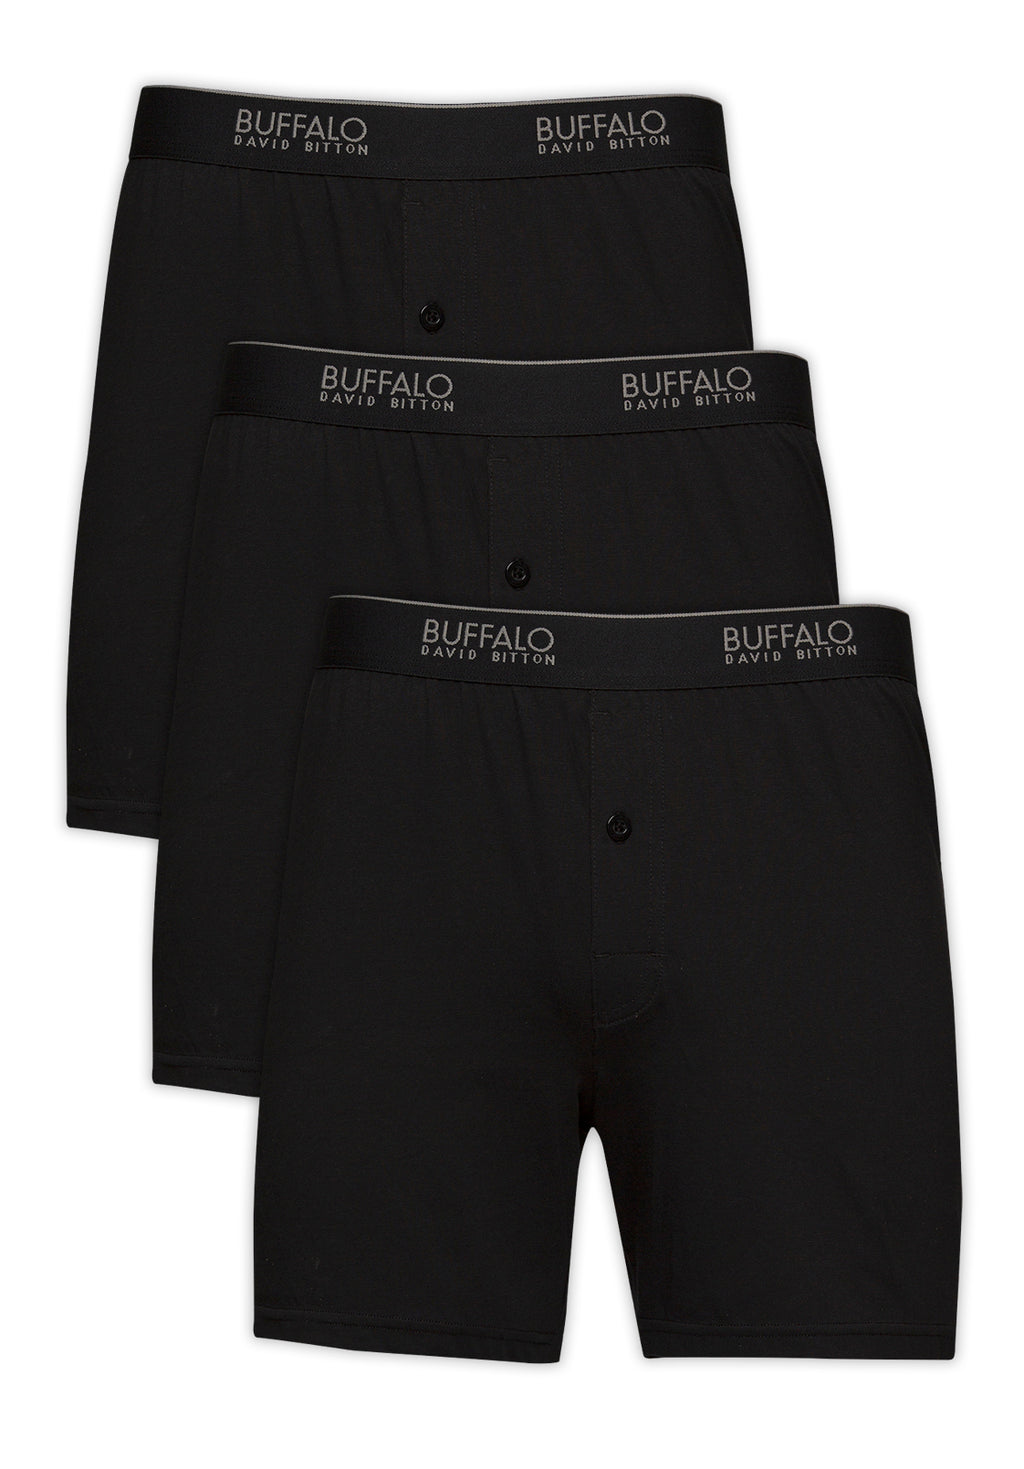 BUFFALO Men's Boxer briefs underwear knit cotton modal stretch XL (3 Pack)  - NWT